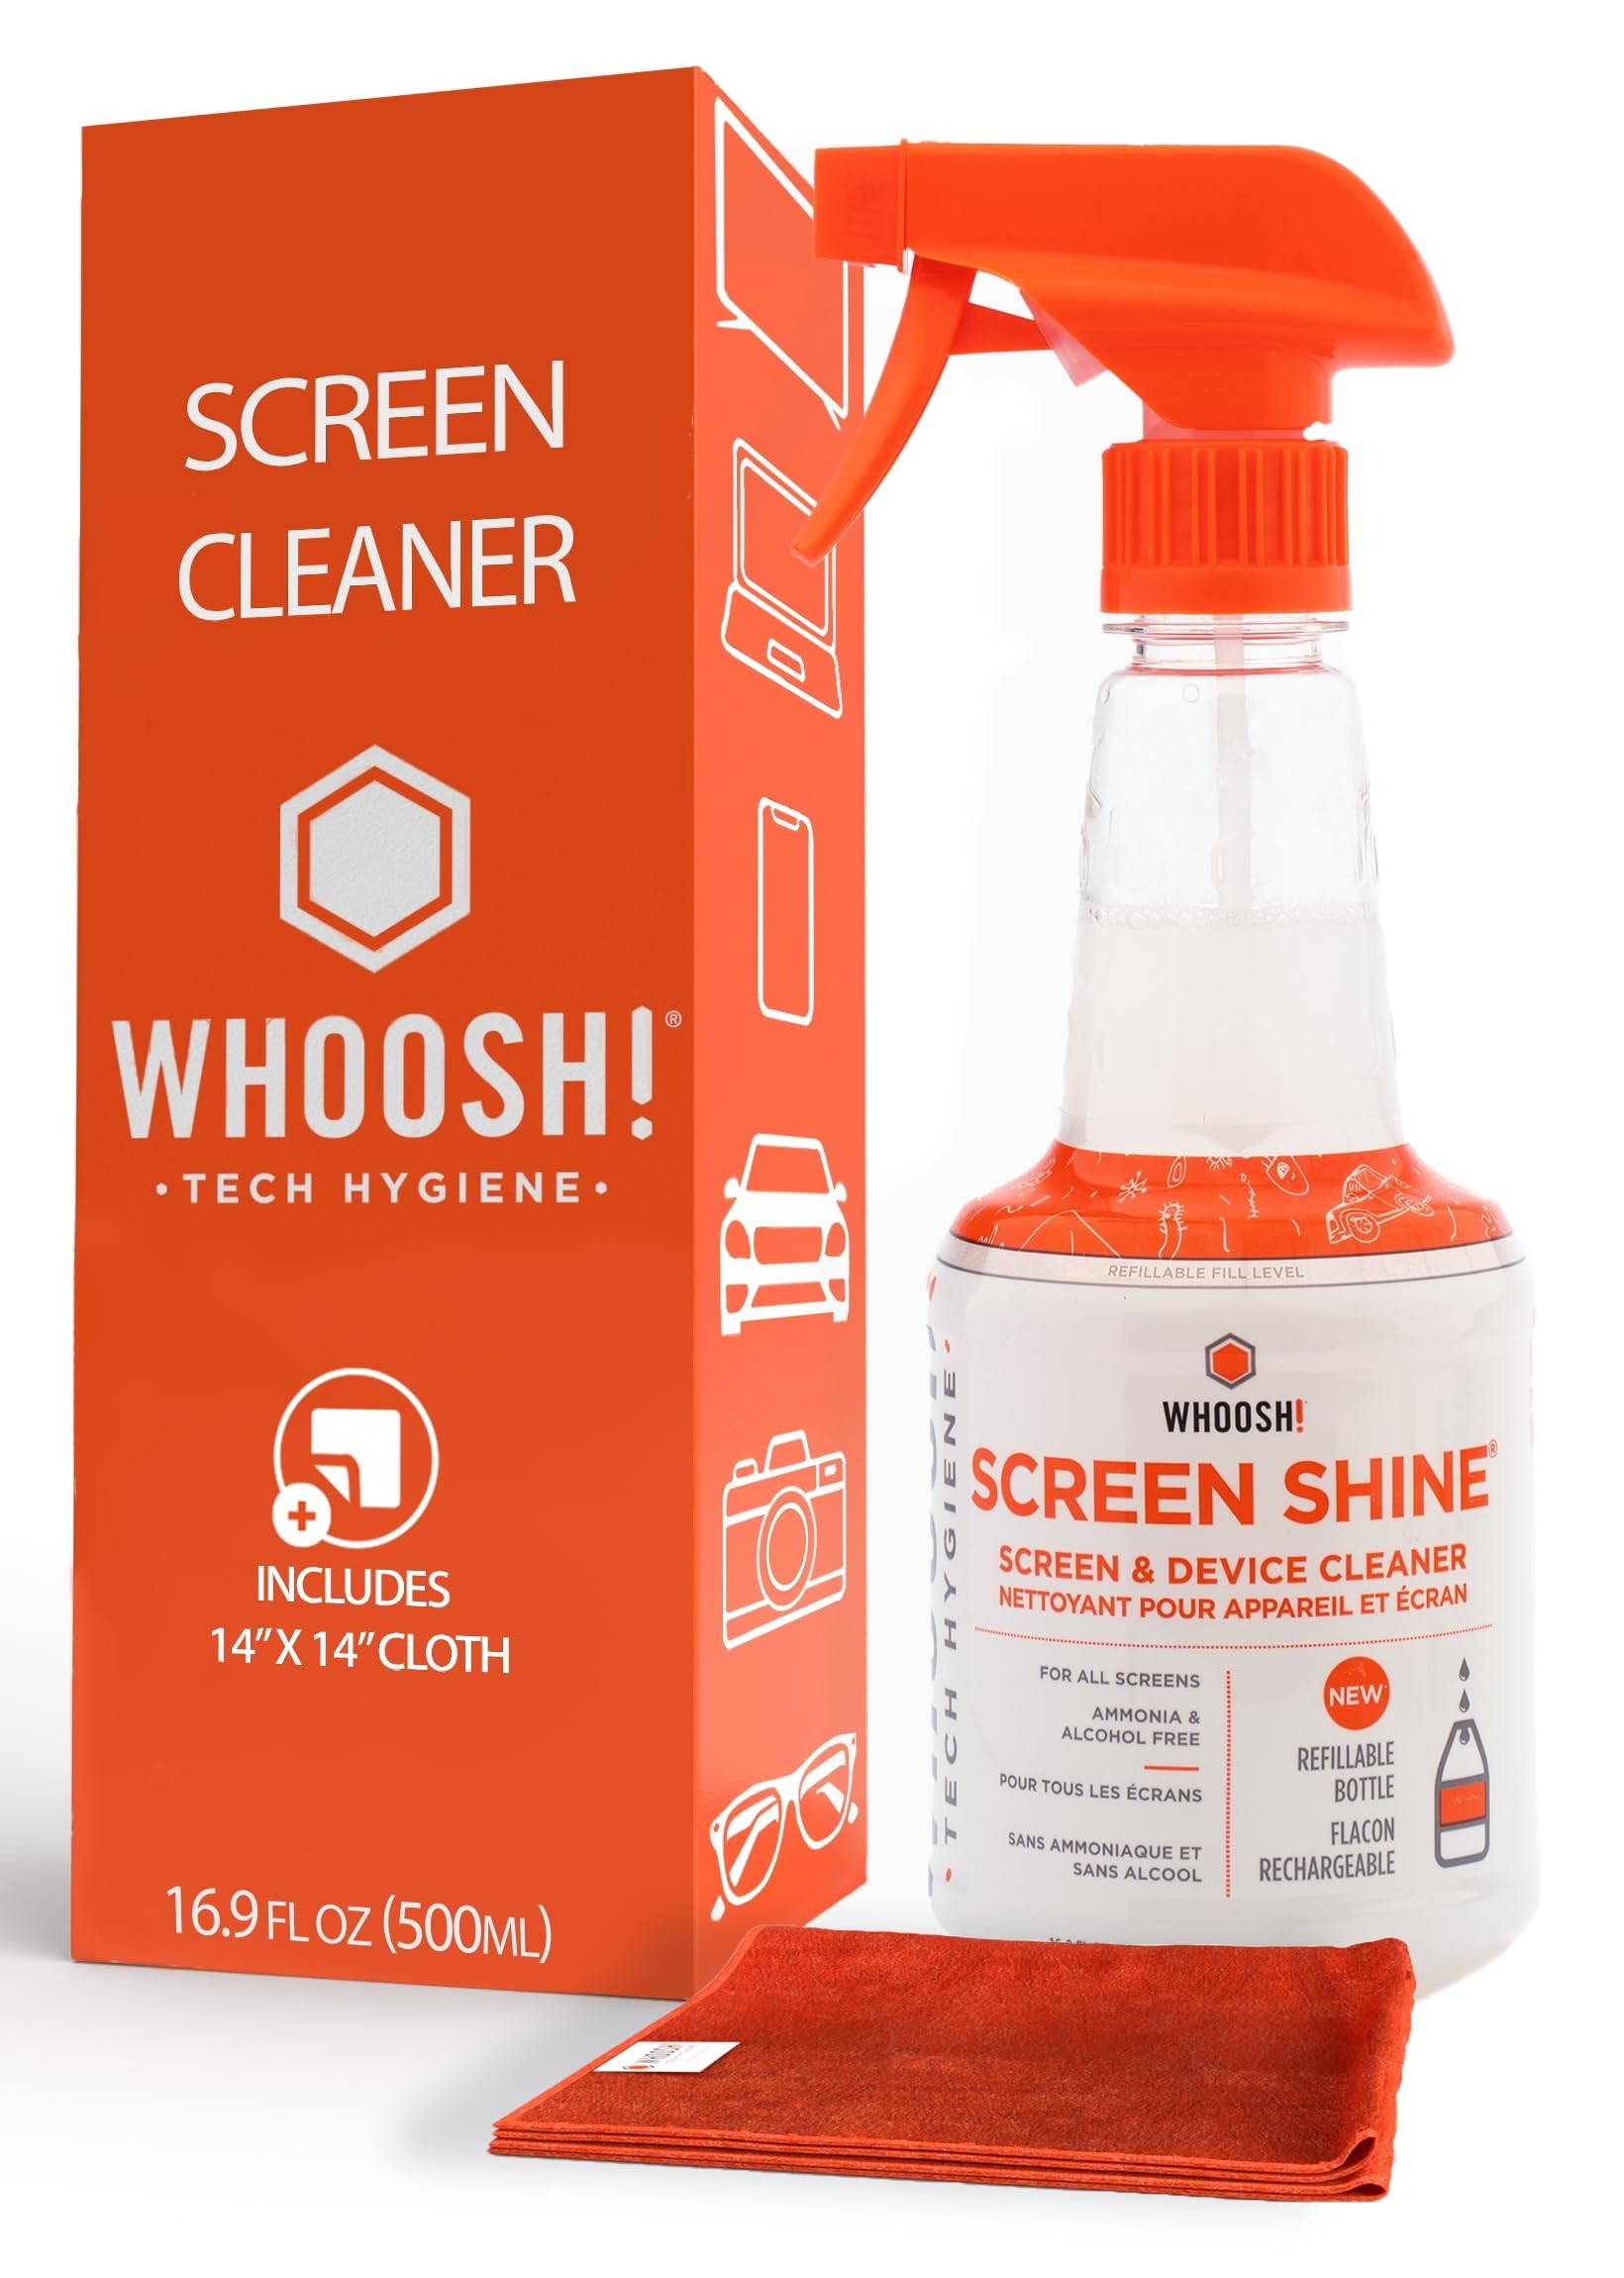 WHOOSH! 2.0 Screen Cleaner Kit - [New REFILLABLE 16.9 Oz $15.99 at Whoosh Inc via Amazon